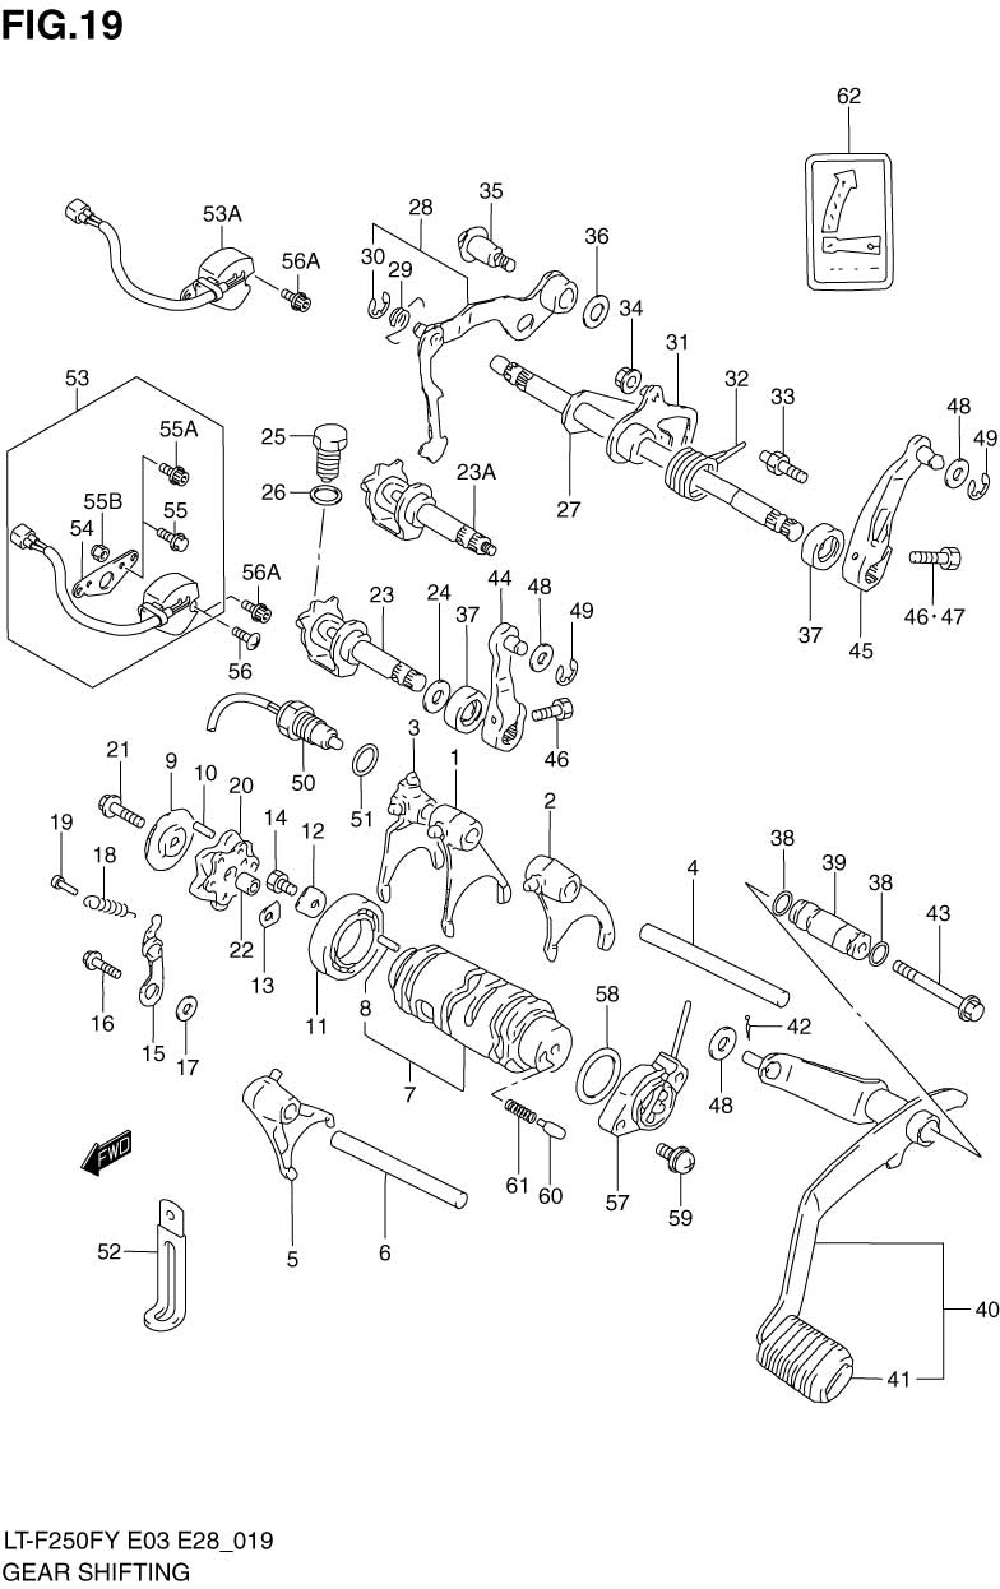 1988 Suzuki Quadrunner 250 Wiring Diagram from diagramweb.net